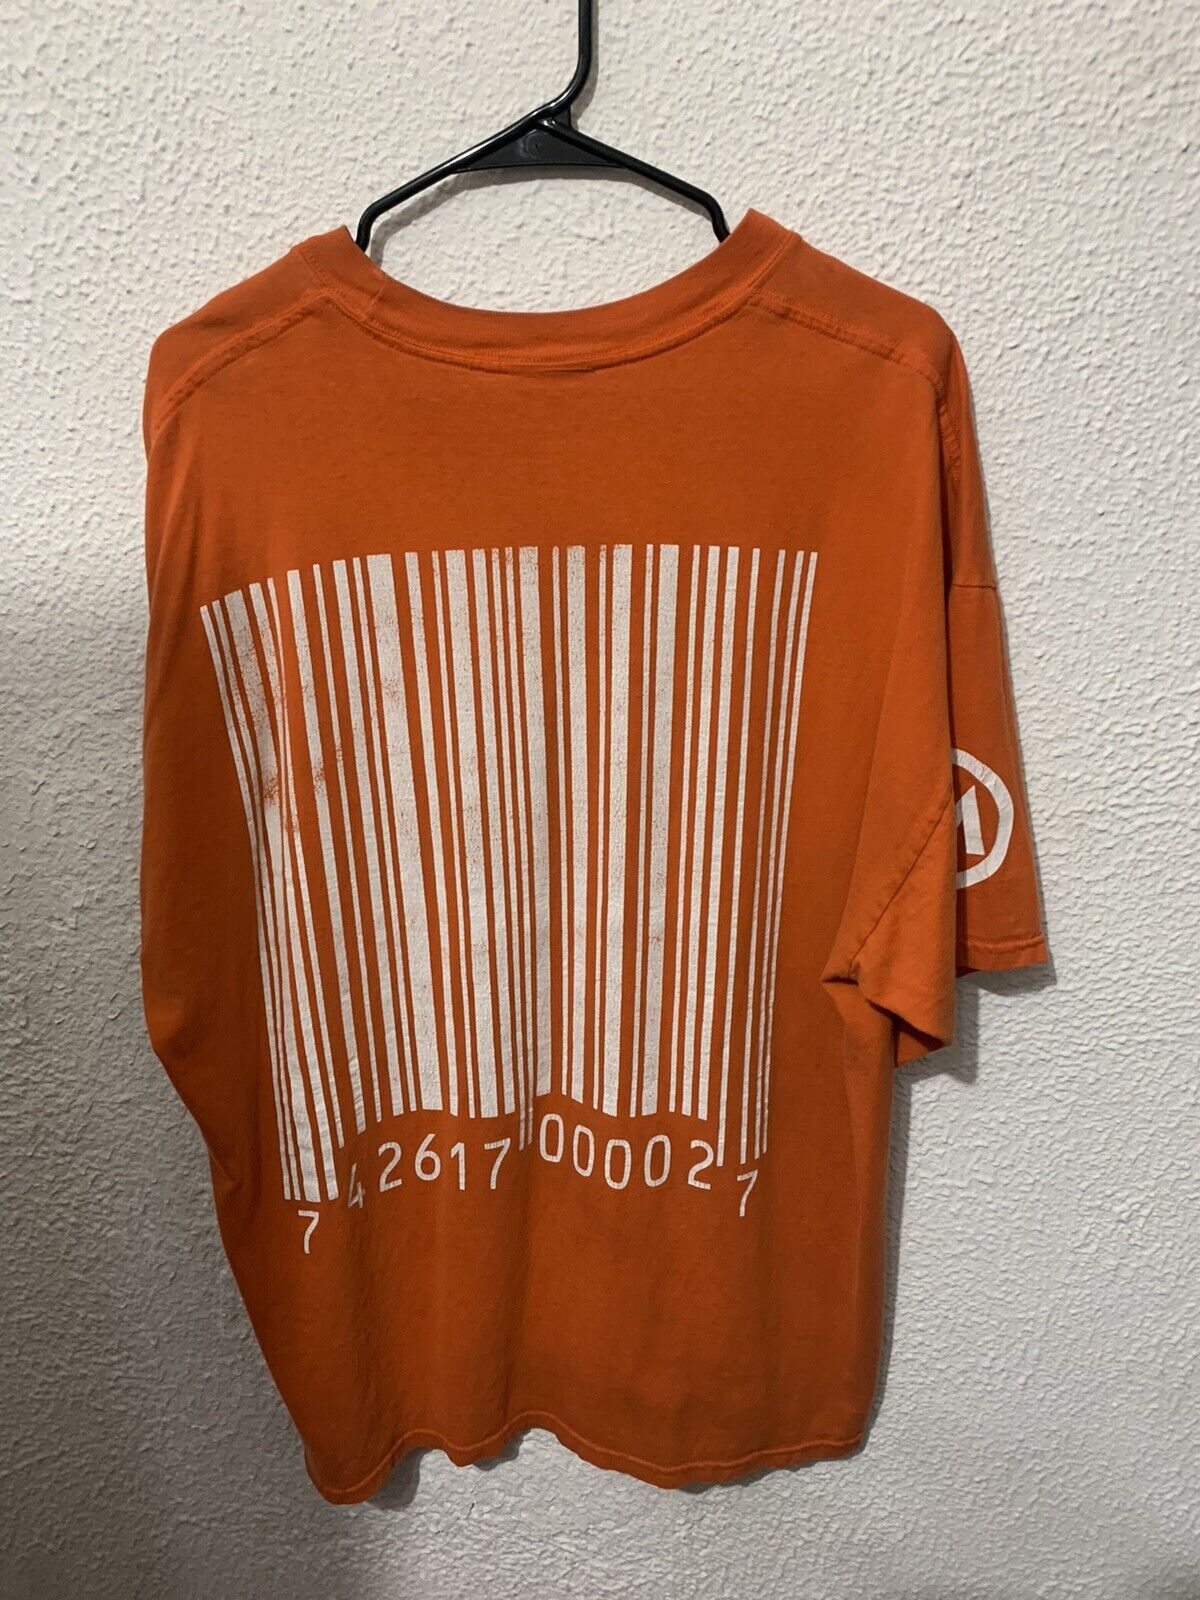 Vintage SLIPKNOT Barcode T-Shirt Heavy Metal Band Rare Orange Color